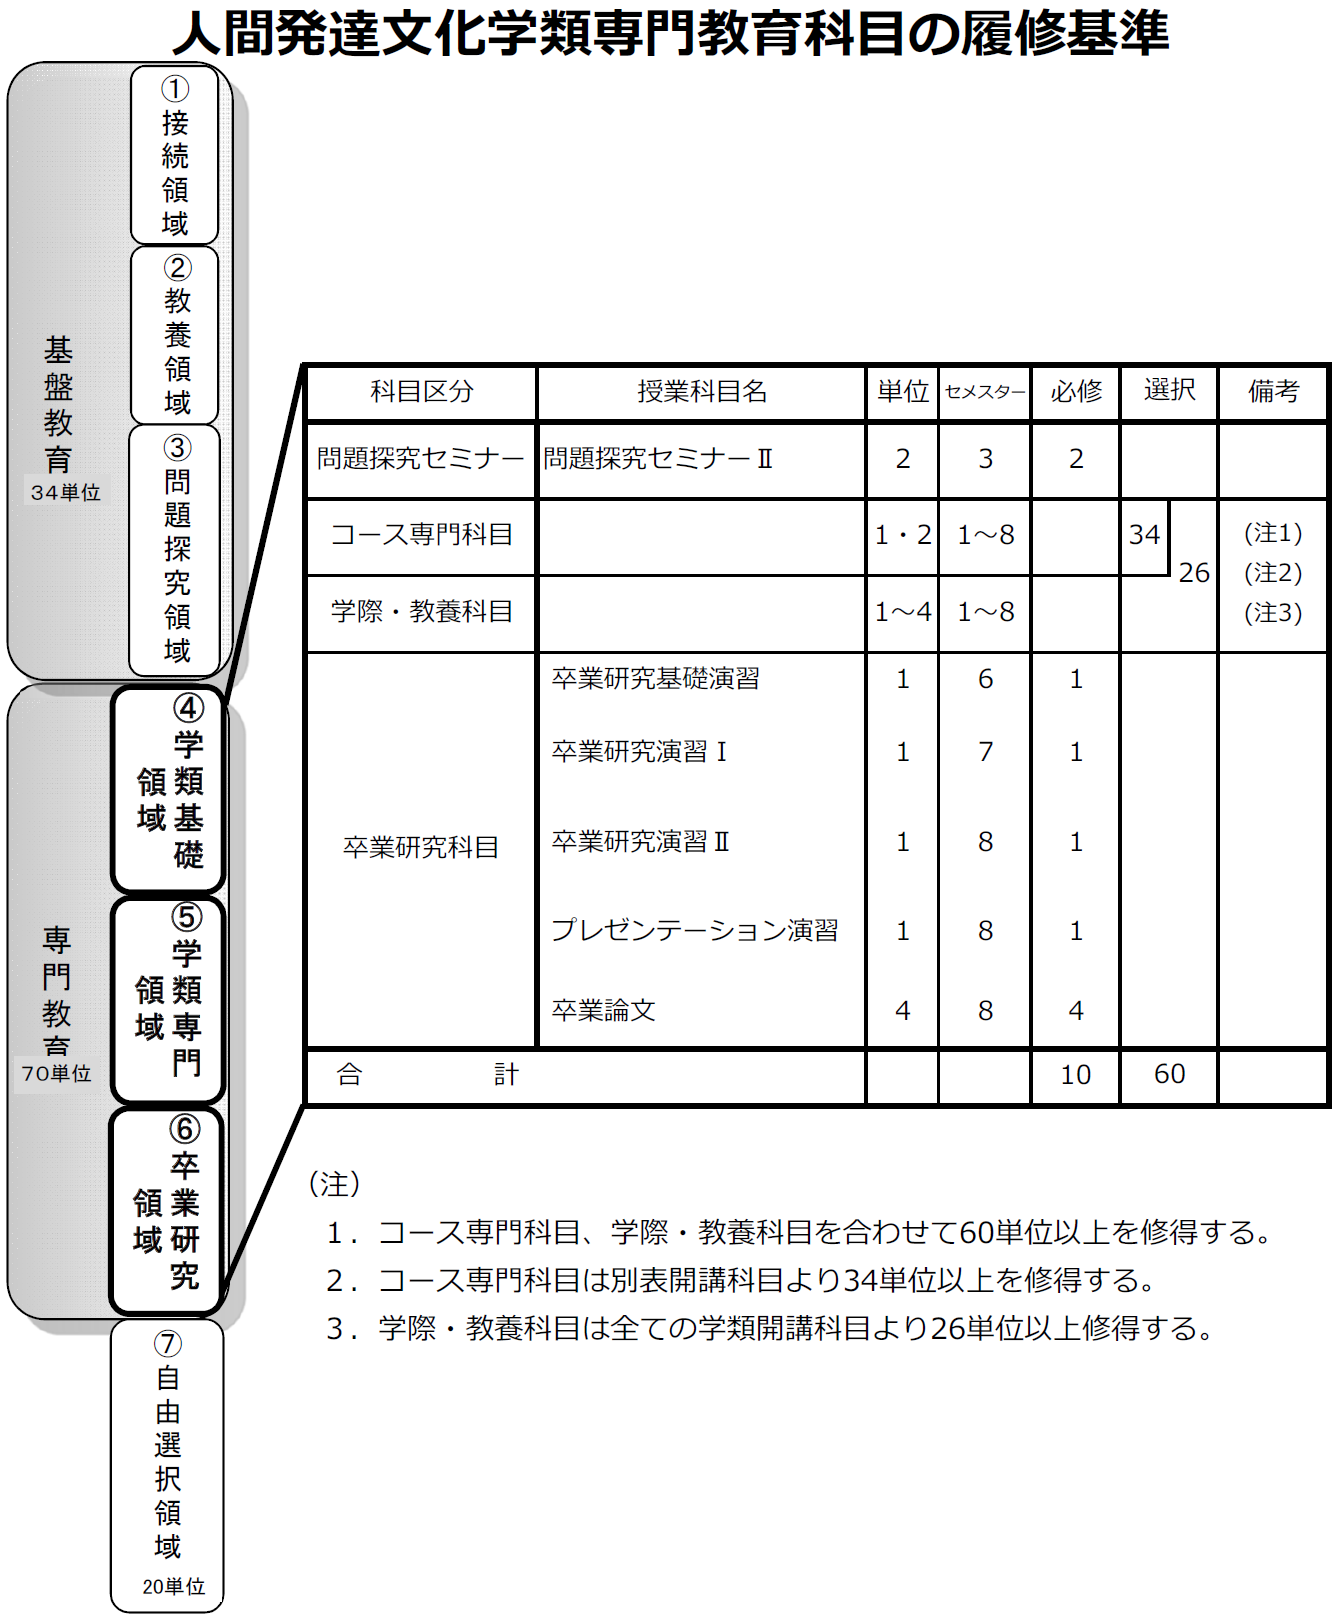 http://kyoumu.adb.fukushima-u.ac.jp/guide/2020/hdc/Files/2020/03/%E4%BA%BA%E9%96%93%E7%99%BA%E9%81%94%E6%96%87%E5%8C%96%E5%AD%A6%E9%A1%9E%E5%B0%82%E9%96%80%E6%95%99%E8%82%B2%E7%A7%91%E7%9B%AE%E3%81%AE%E5%B1%A5%E4%BF%AE%E5%9F%BA%E6%BA%96200330.png